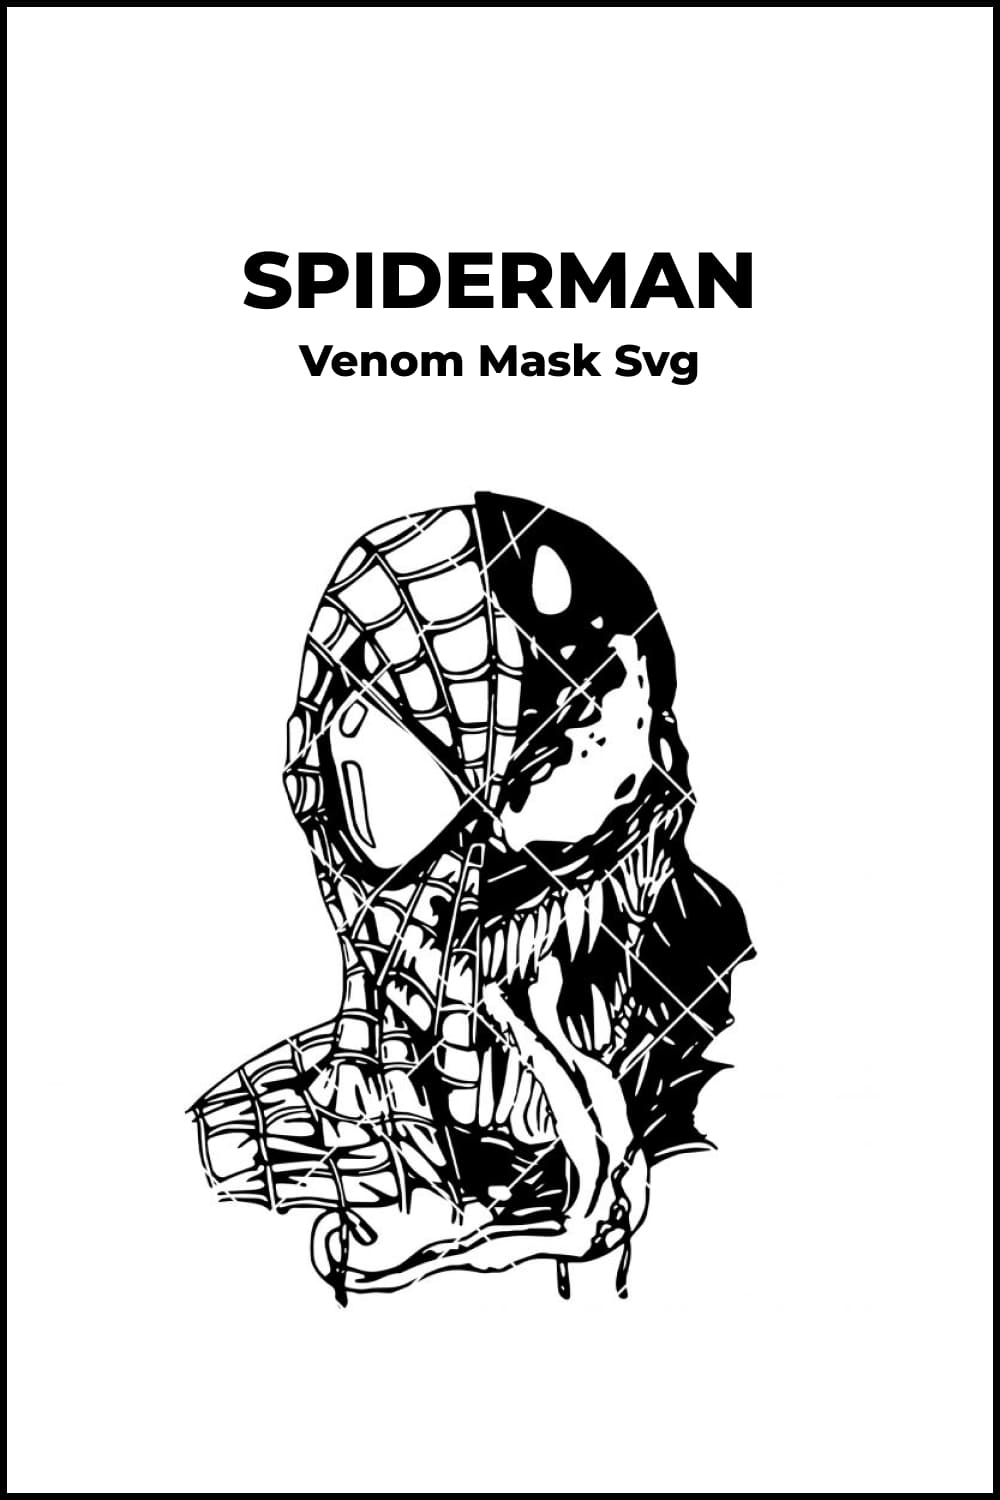 Spider-Man Venom Mask Svg.